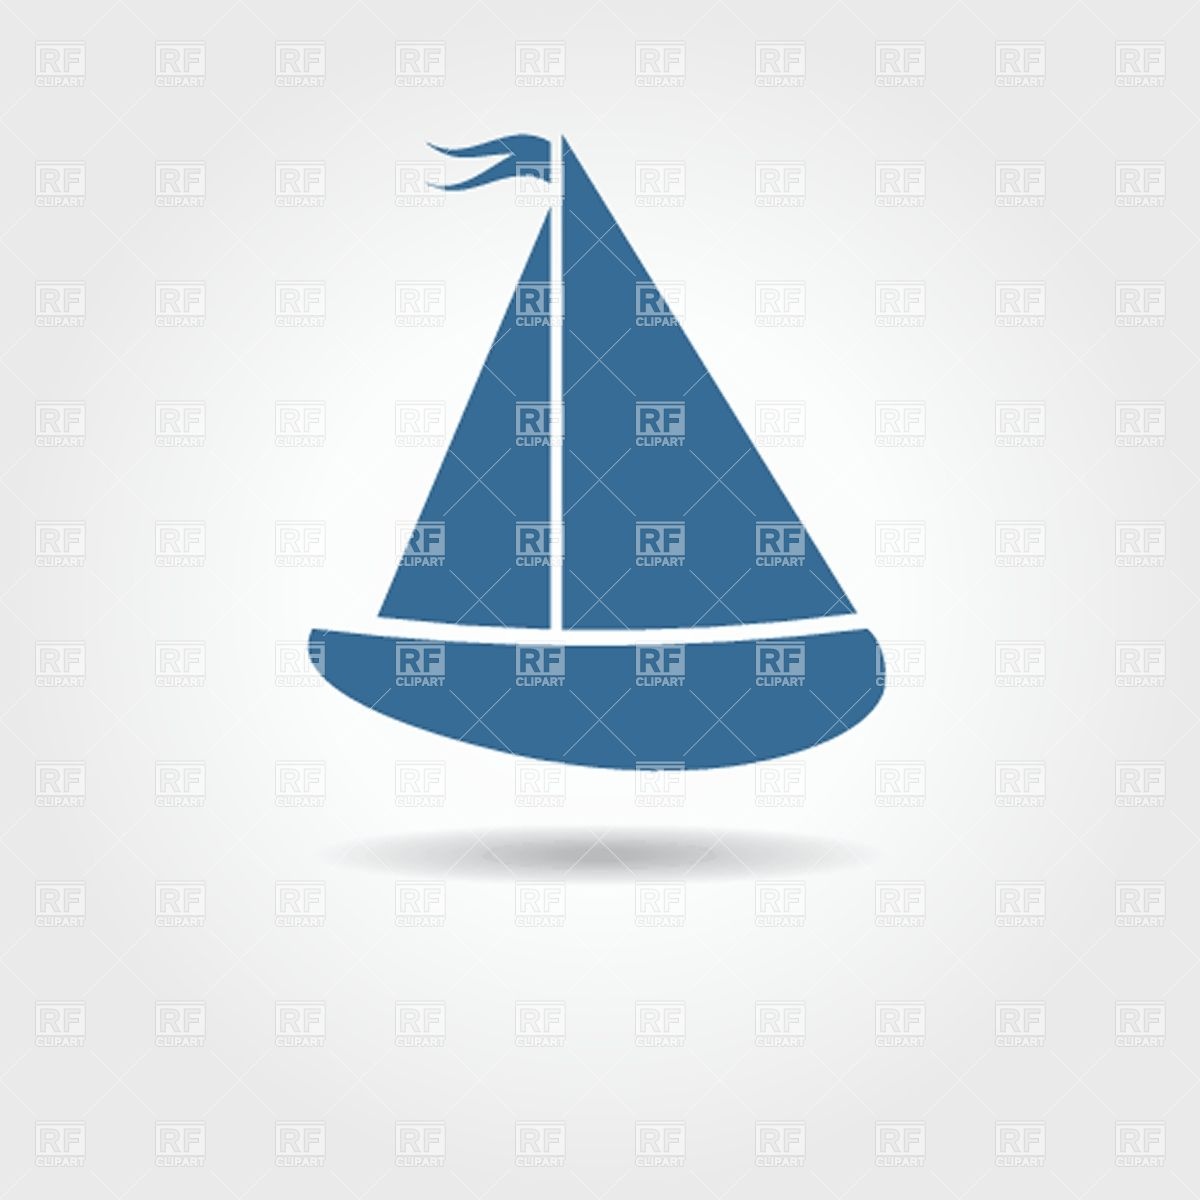 Simple Sailboat Clip Art